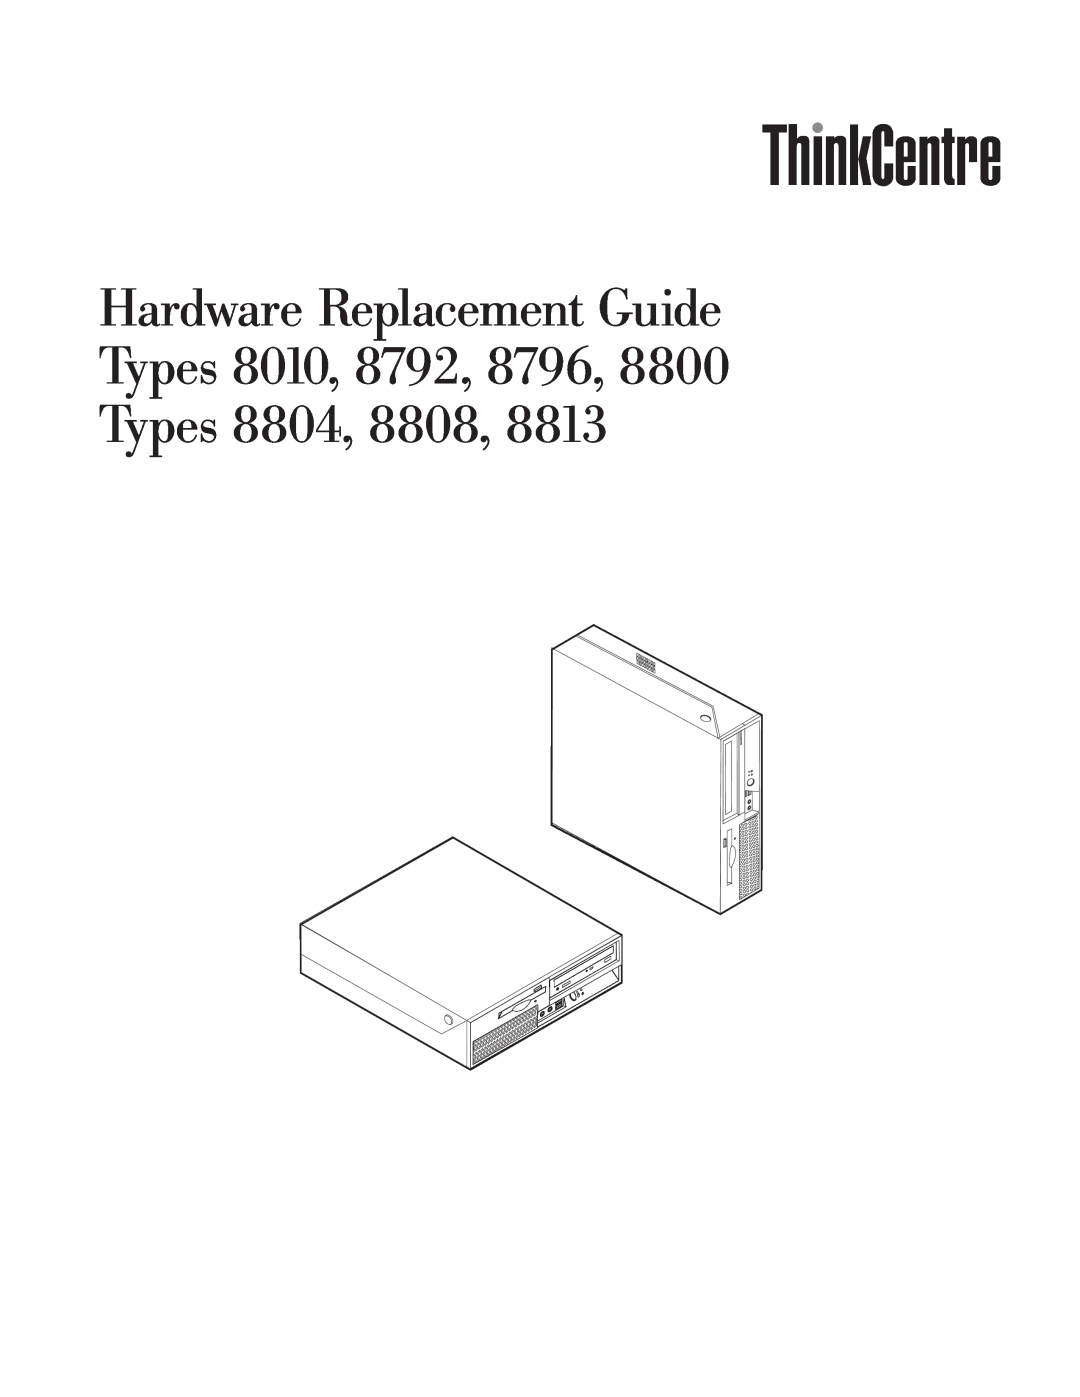 Lenovo 8813, 8800 manual User Guide Types 8010, 8792, 8796, Types 8804, 8808 